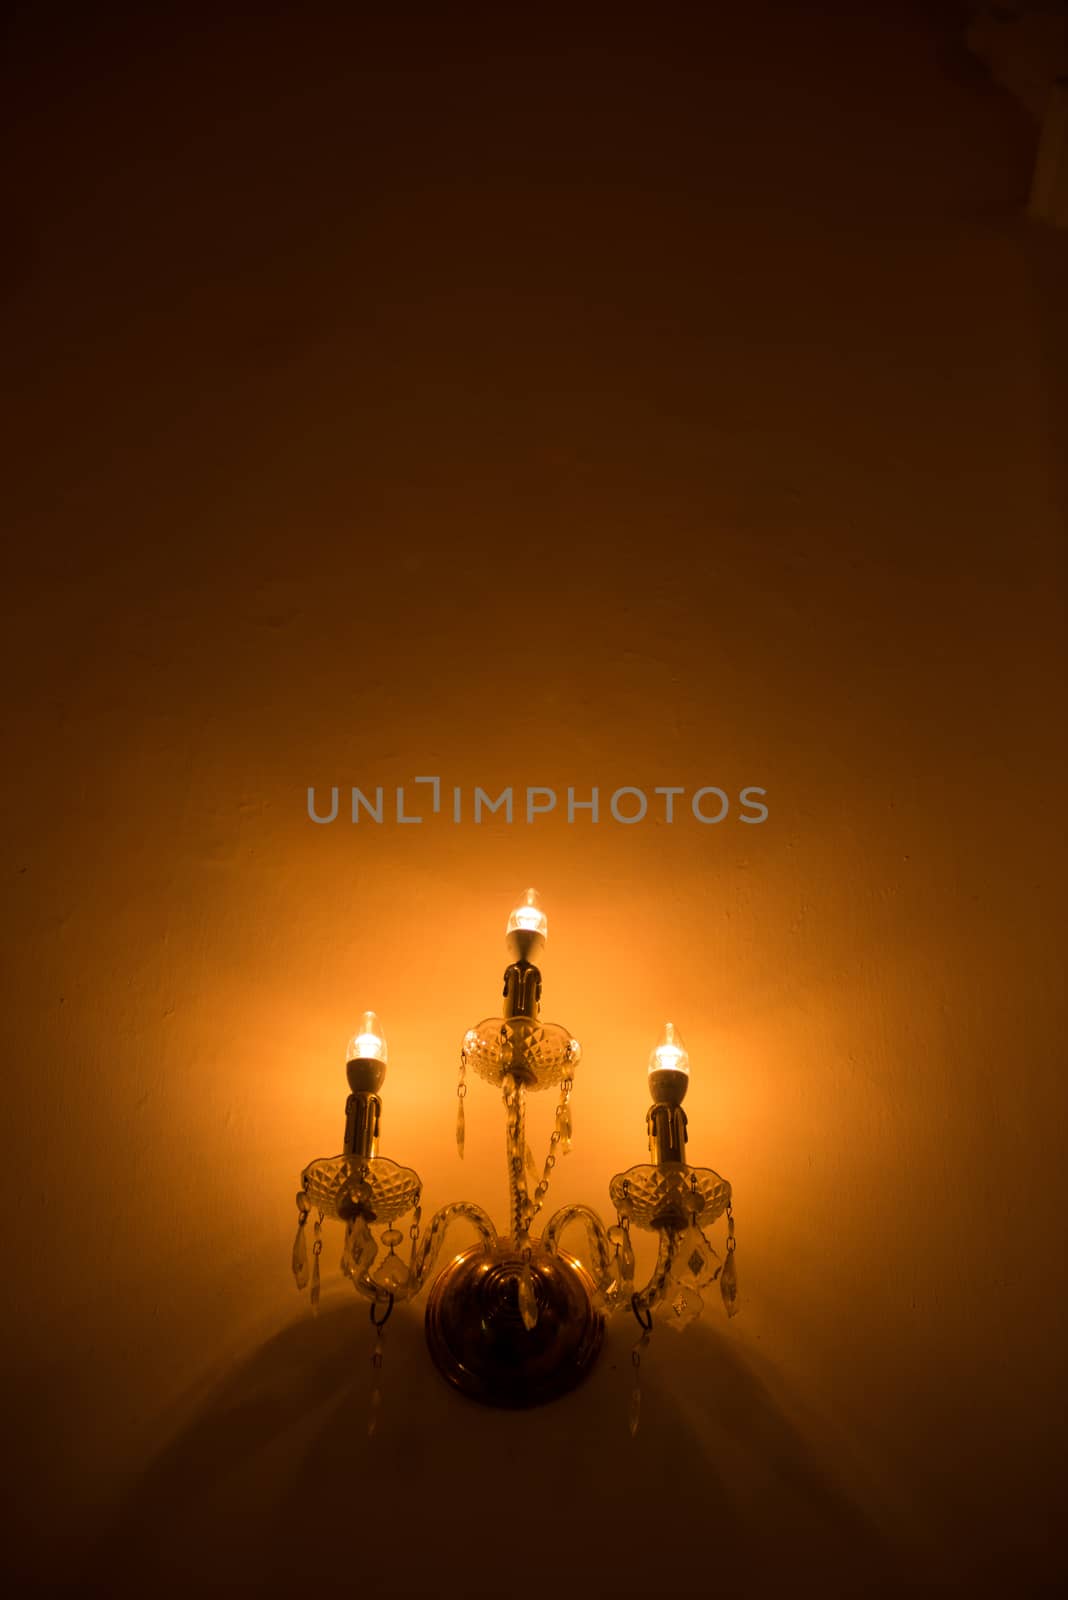 artificial candlesticks by antpkr